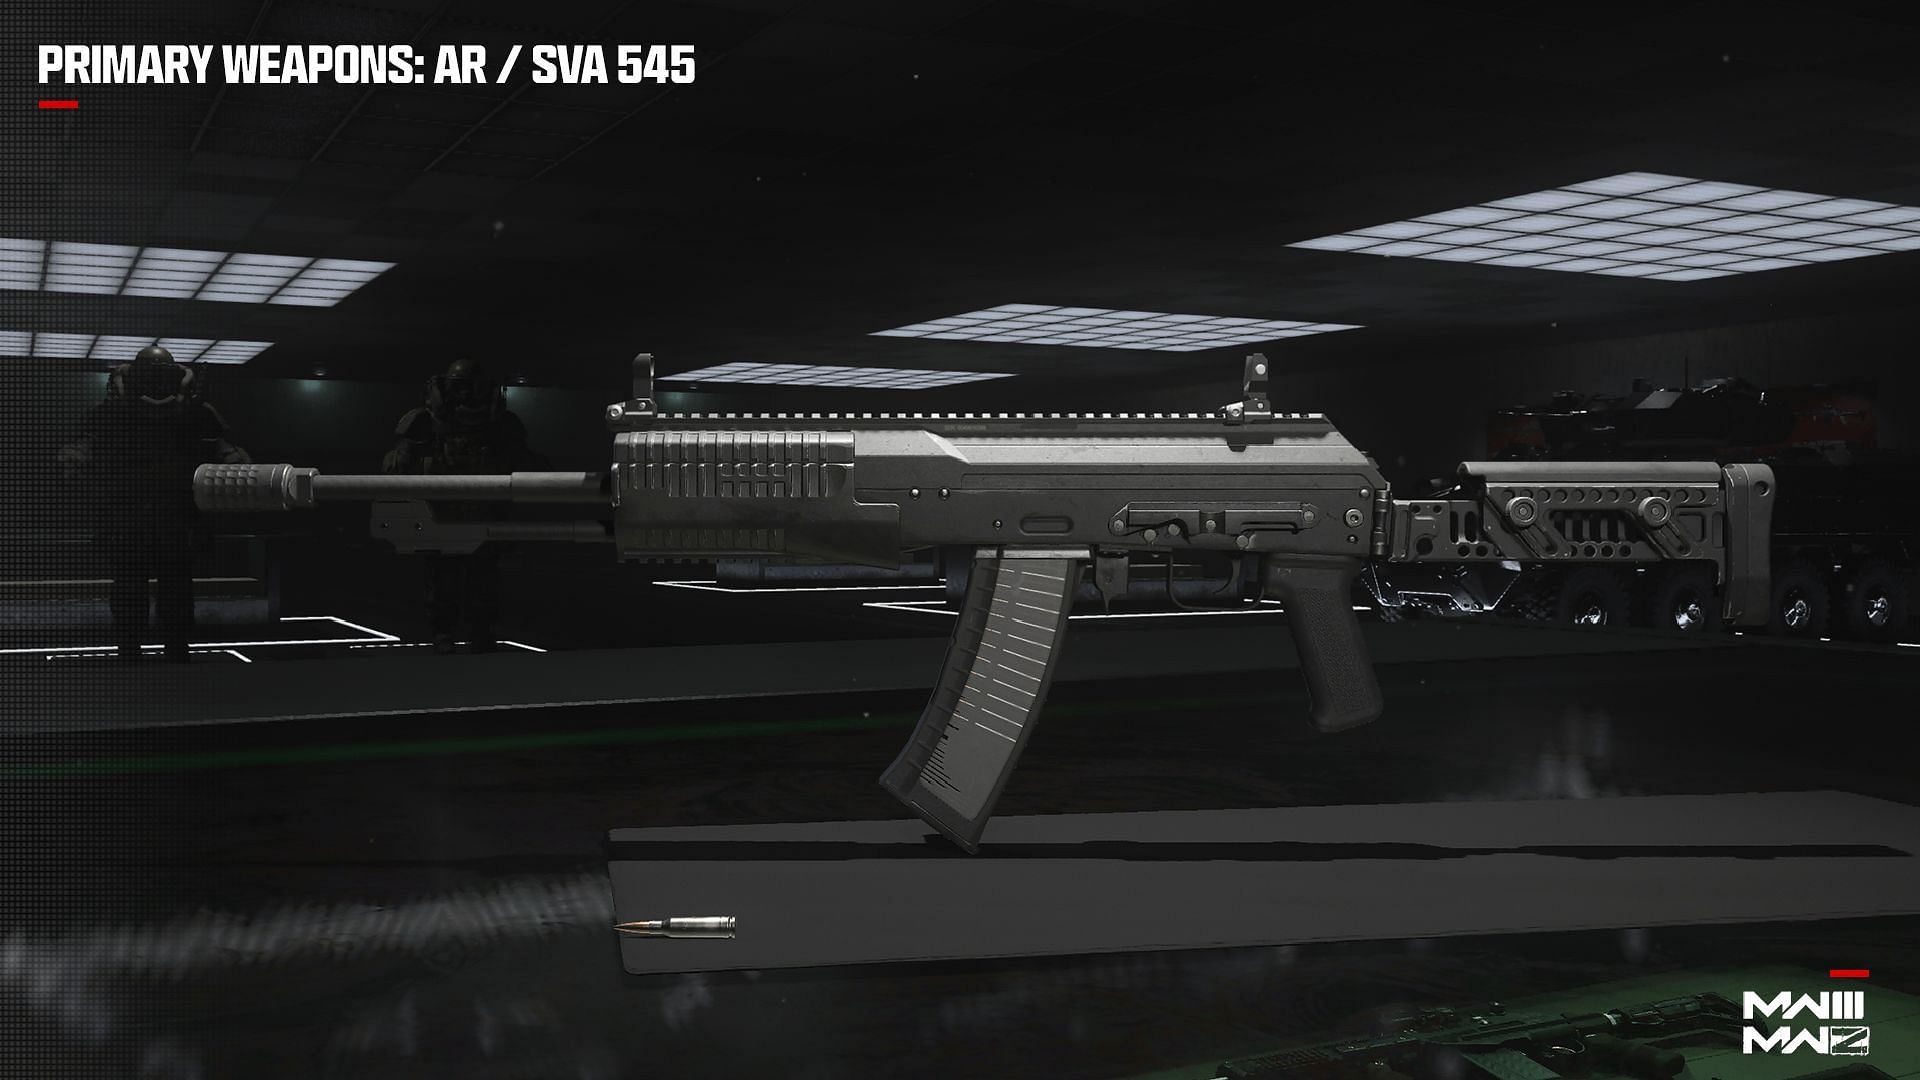 SVA 545 AR in Warzone (Image via Activision)